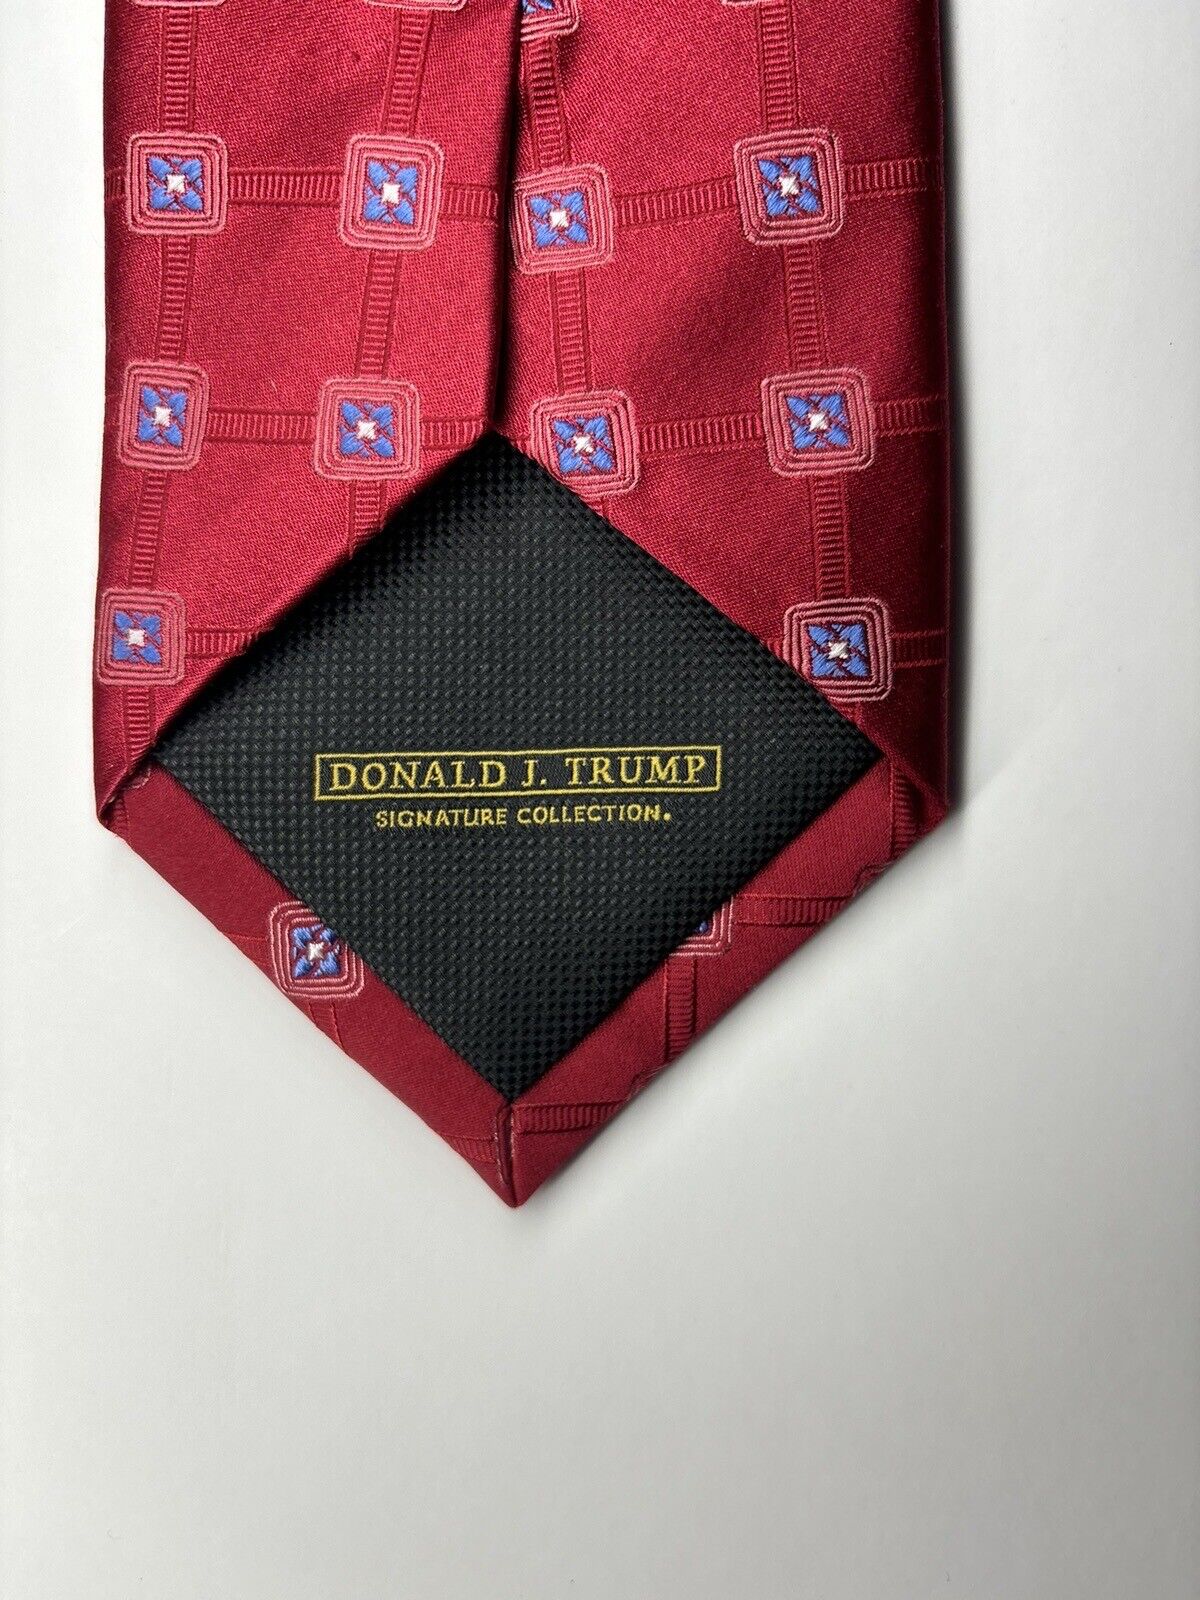 DONALD TRUMP Tie Red Geometric Tie Signature Collection